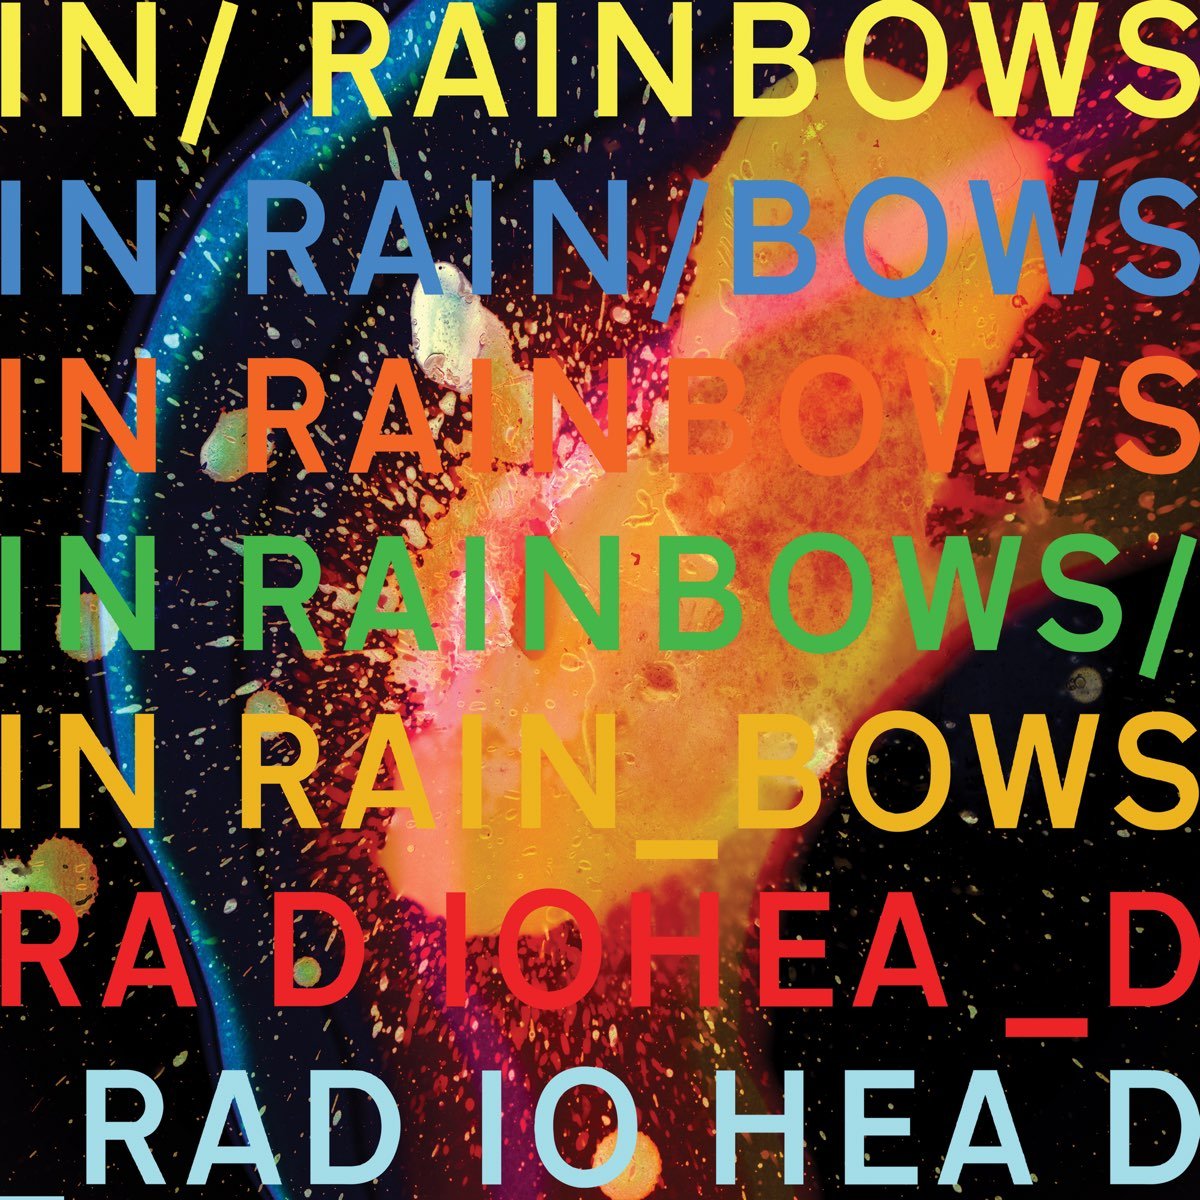 Radiohead_InRainbows.jpg